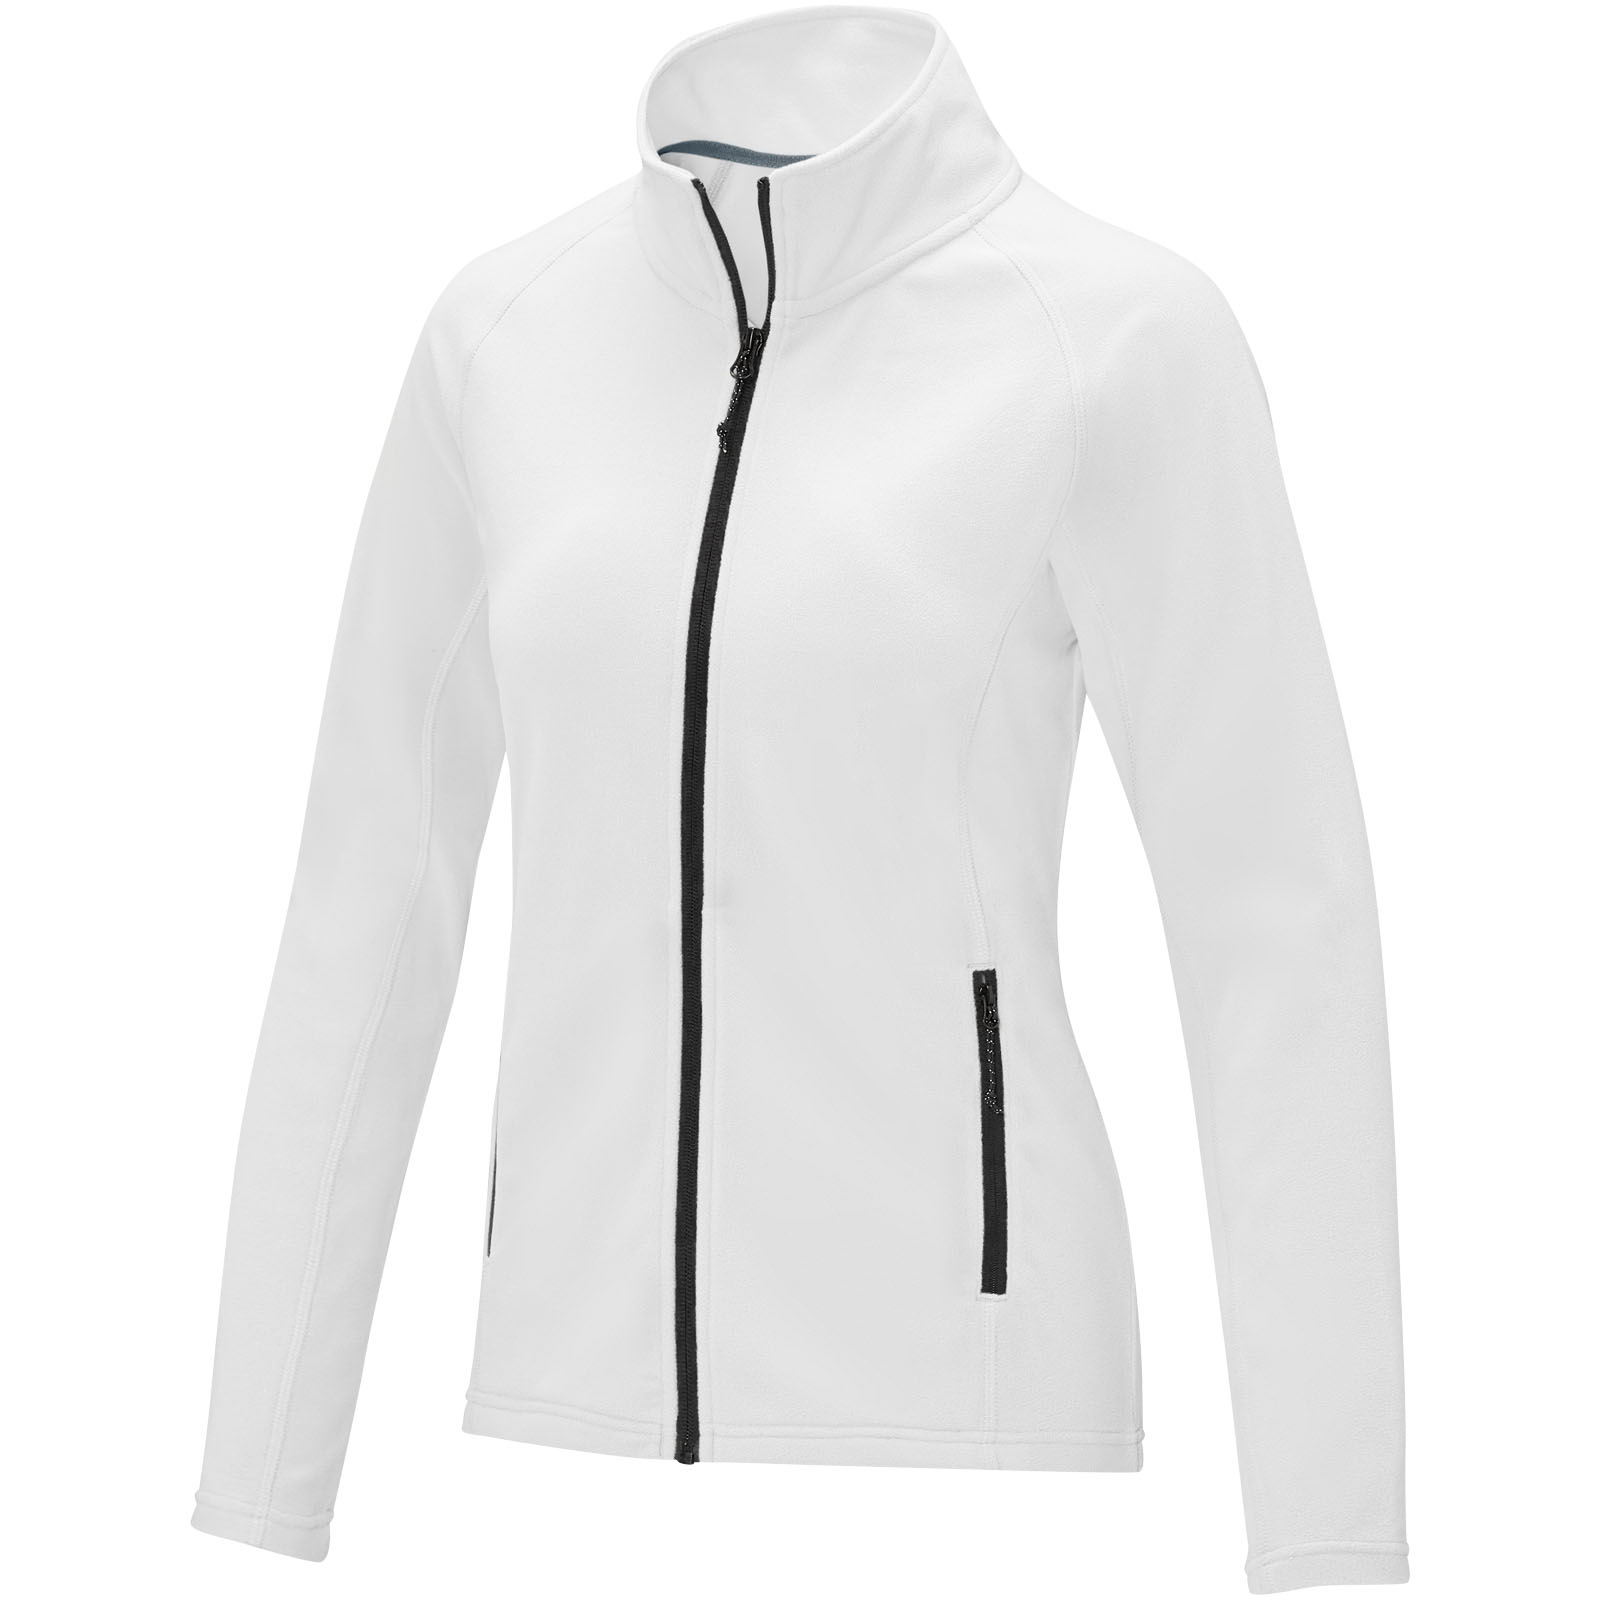 Jackets - Zelus women's fleece jacket